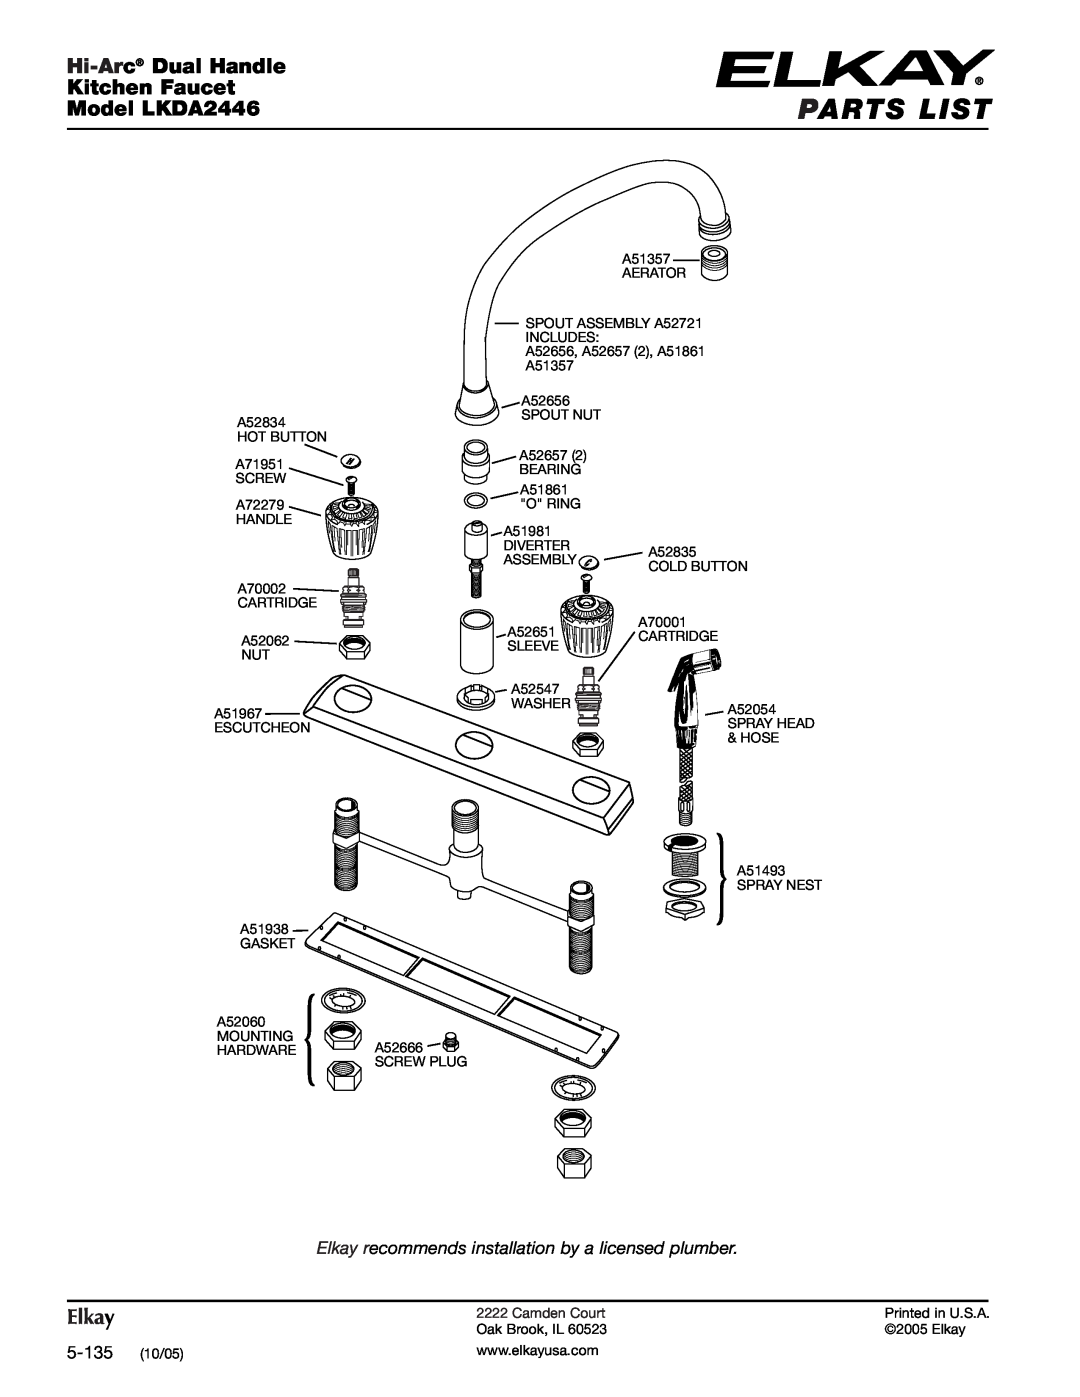 Elkay specifications Parts List, Hi-Arc Dual Handle, Kitchen Faucet, Model LKDA2446, Elkay 